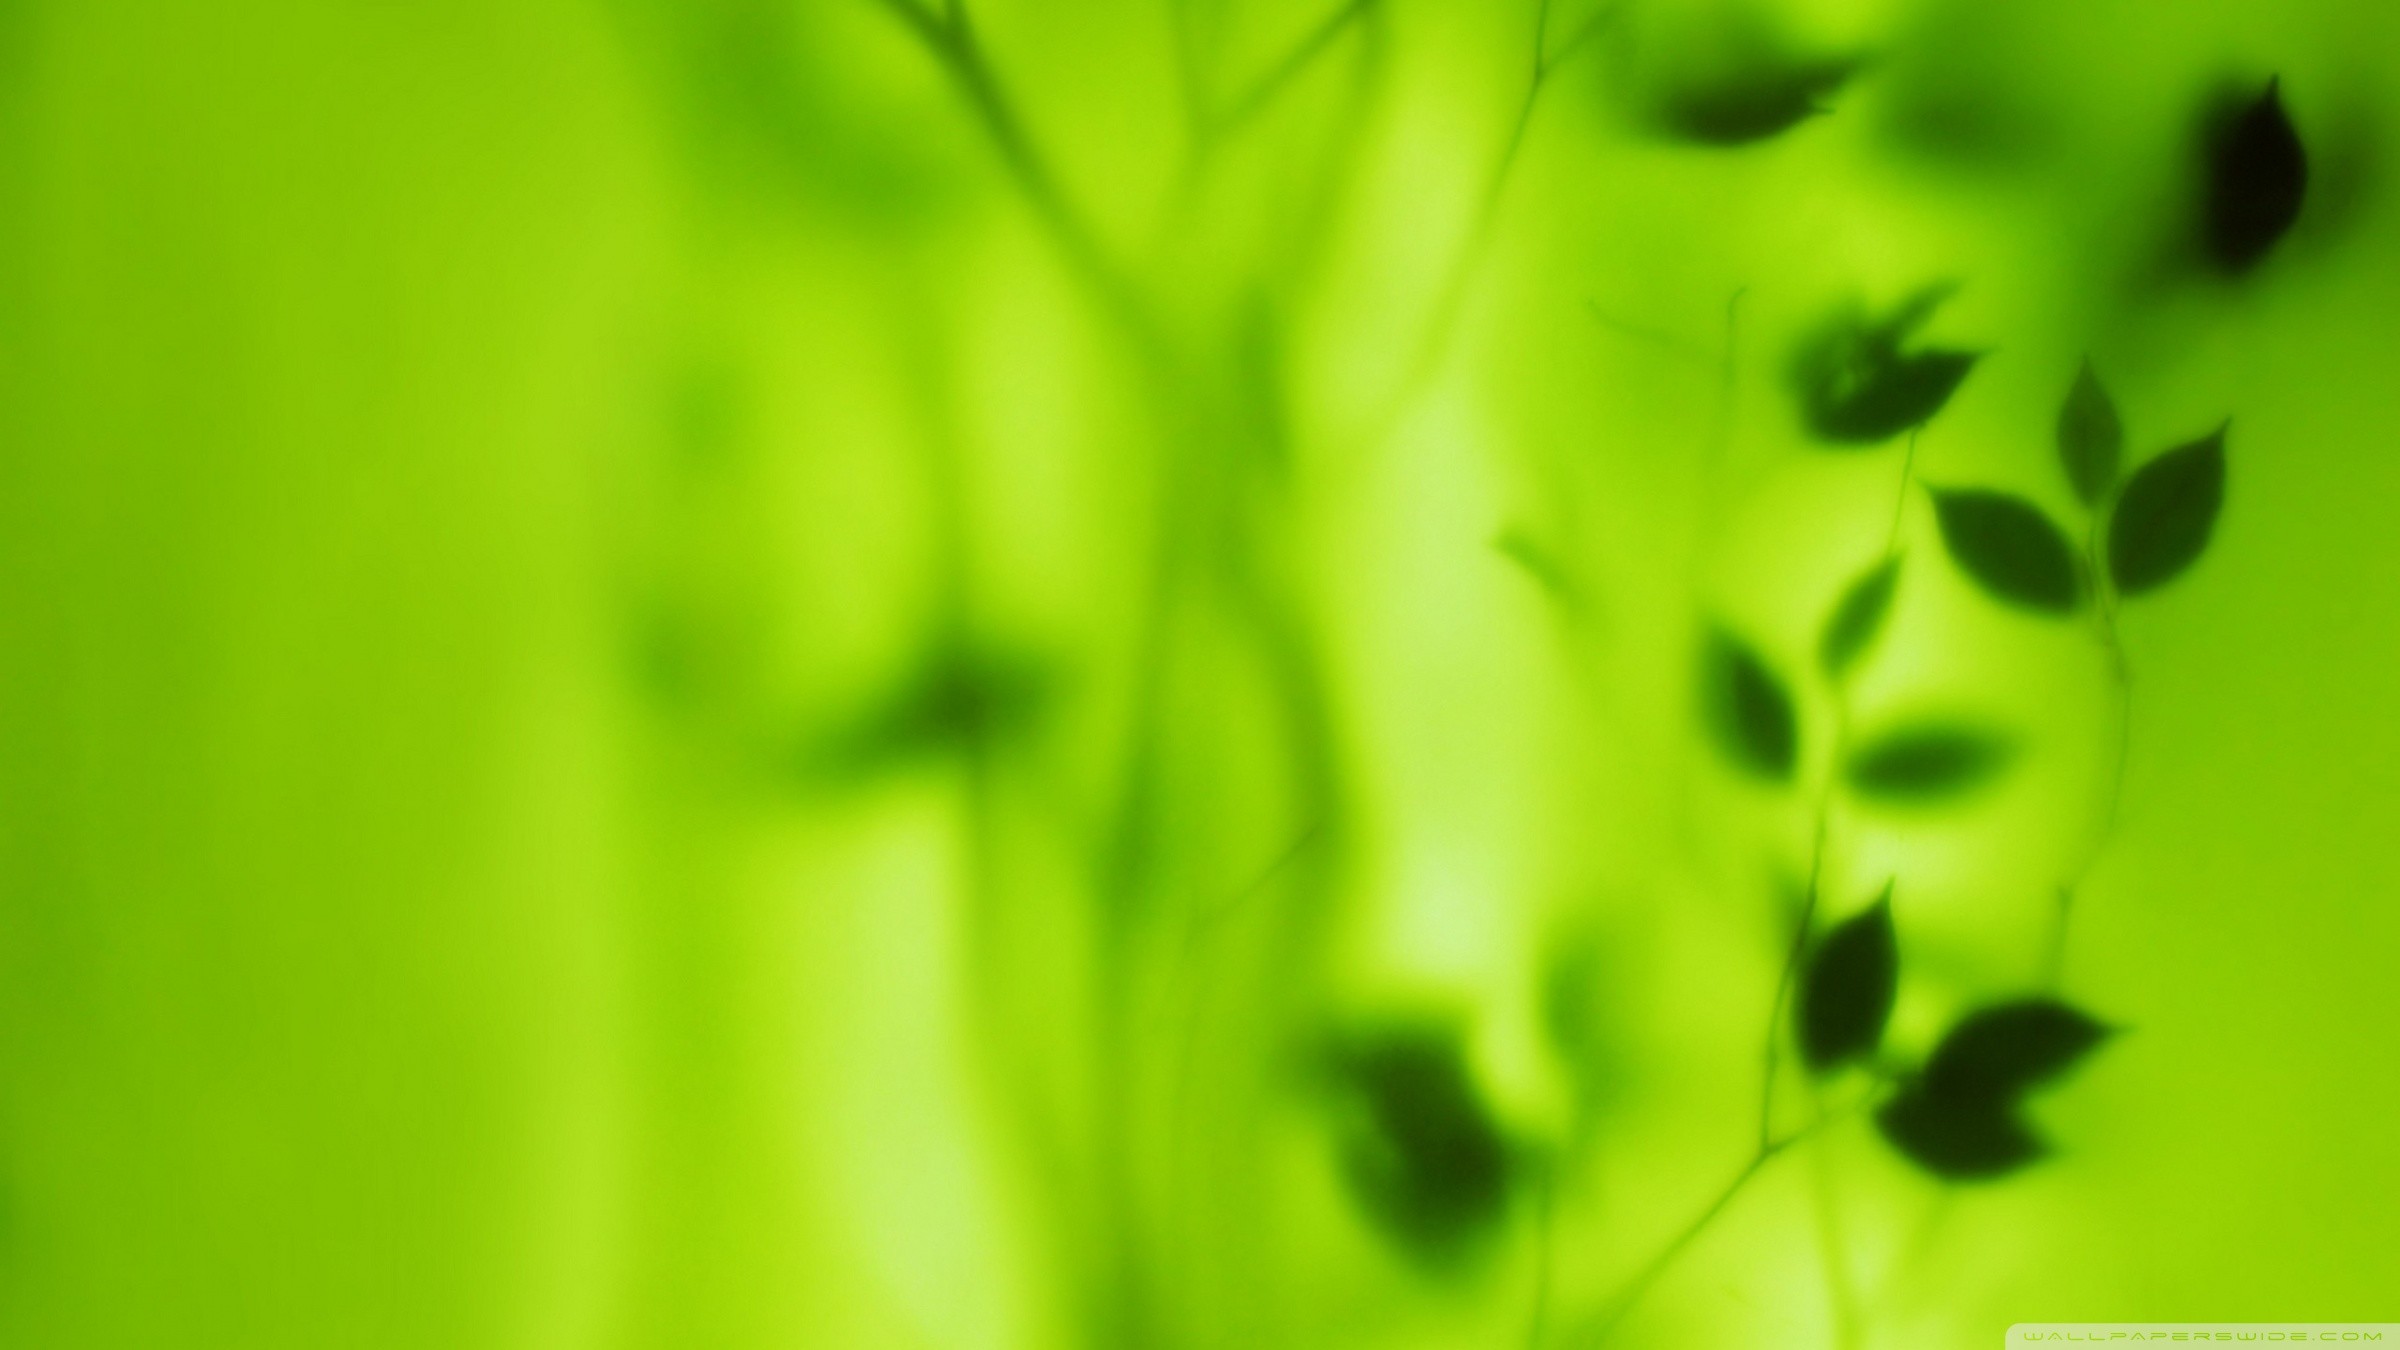 2560x1600, Wallpaper Green Leaves - Green High Resolution Blur Background , HD Wallpaper & Backgrounds